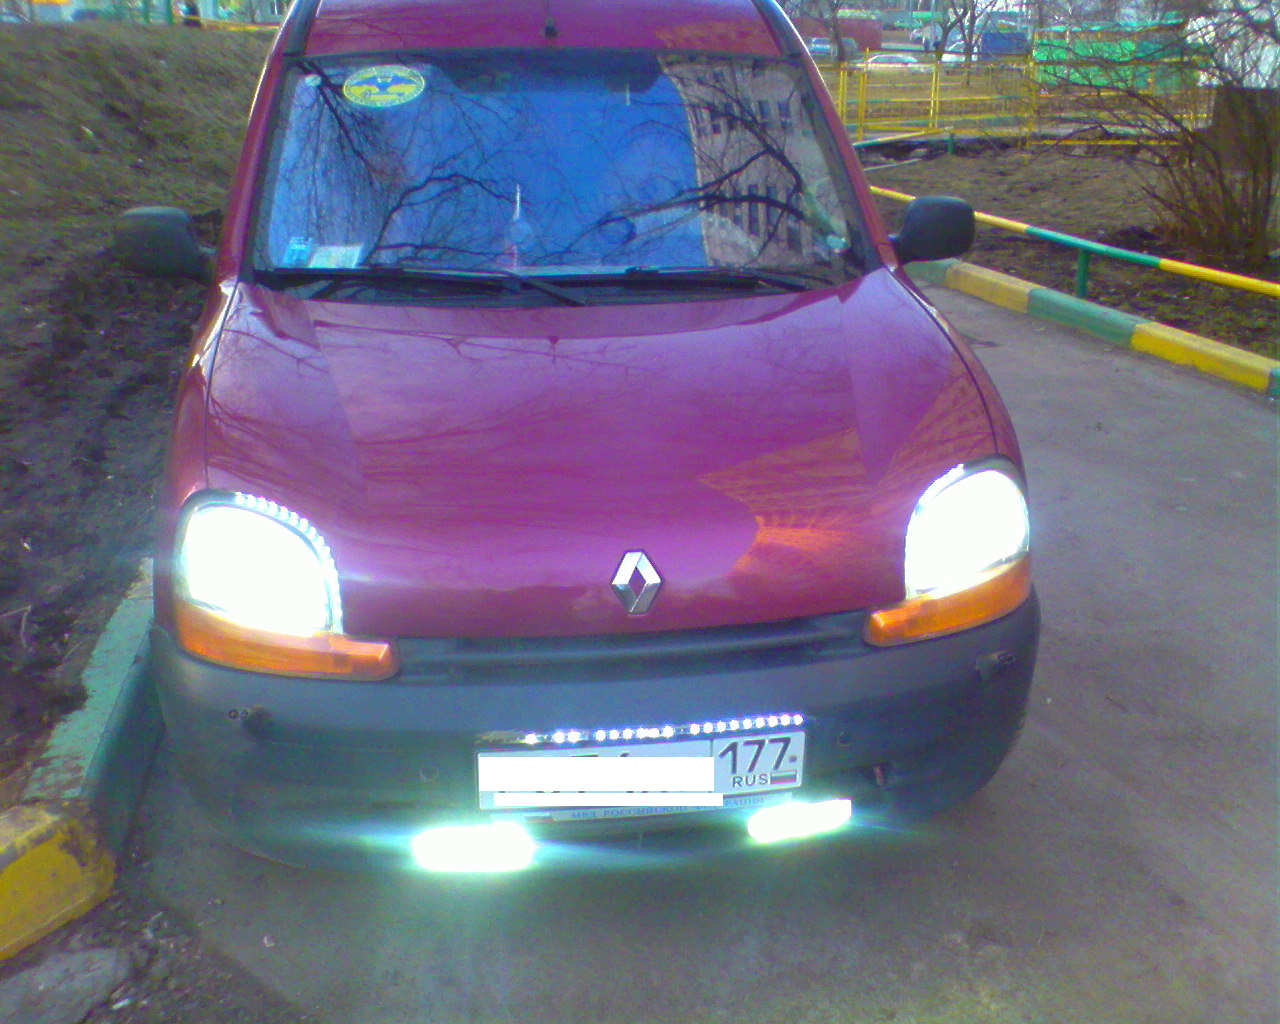 2001 Renault Kangoo